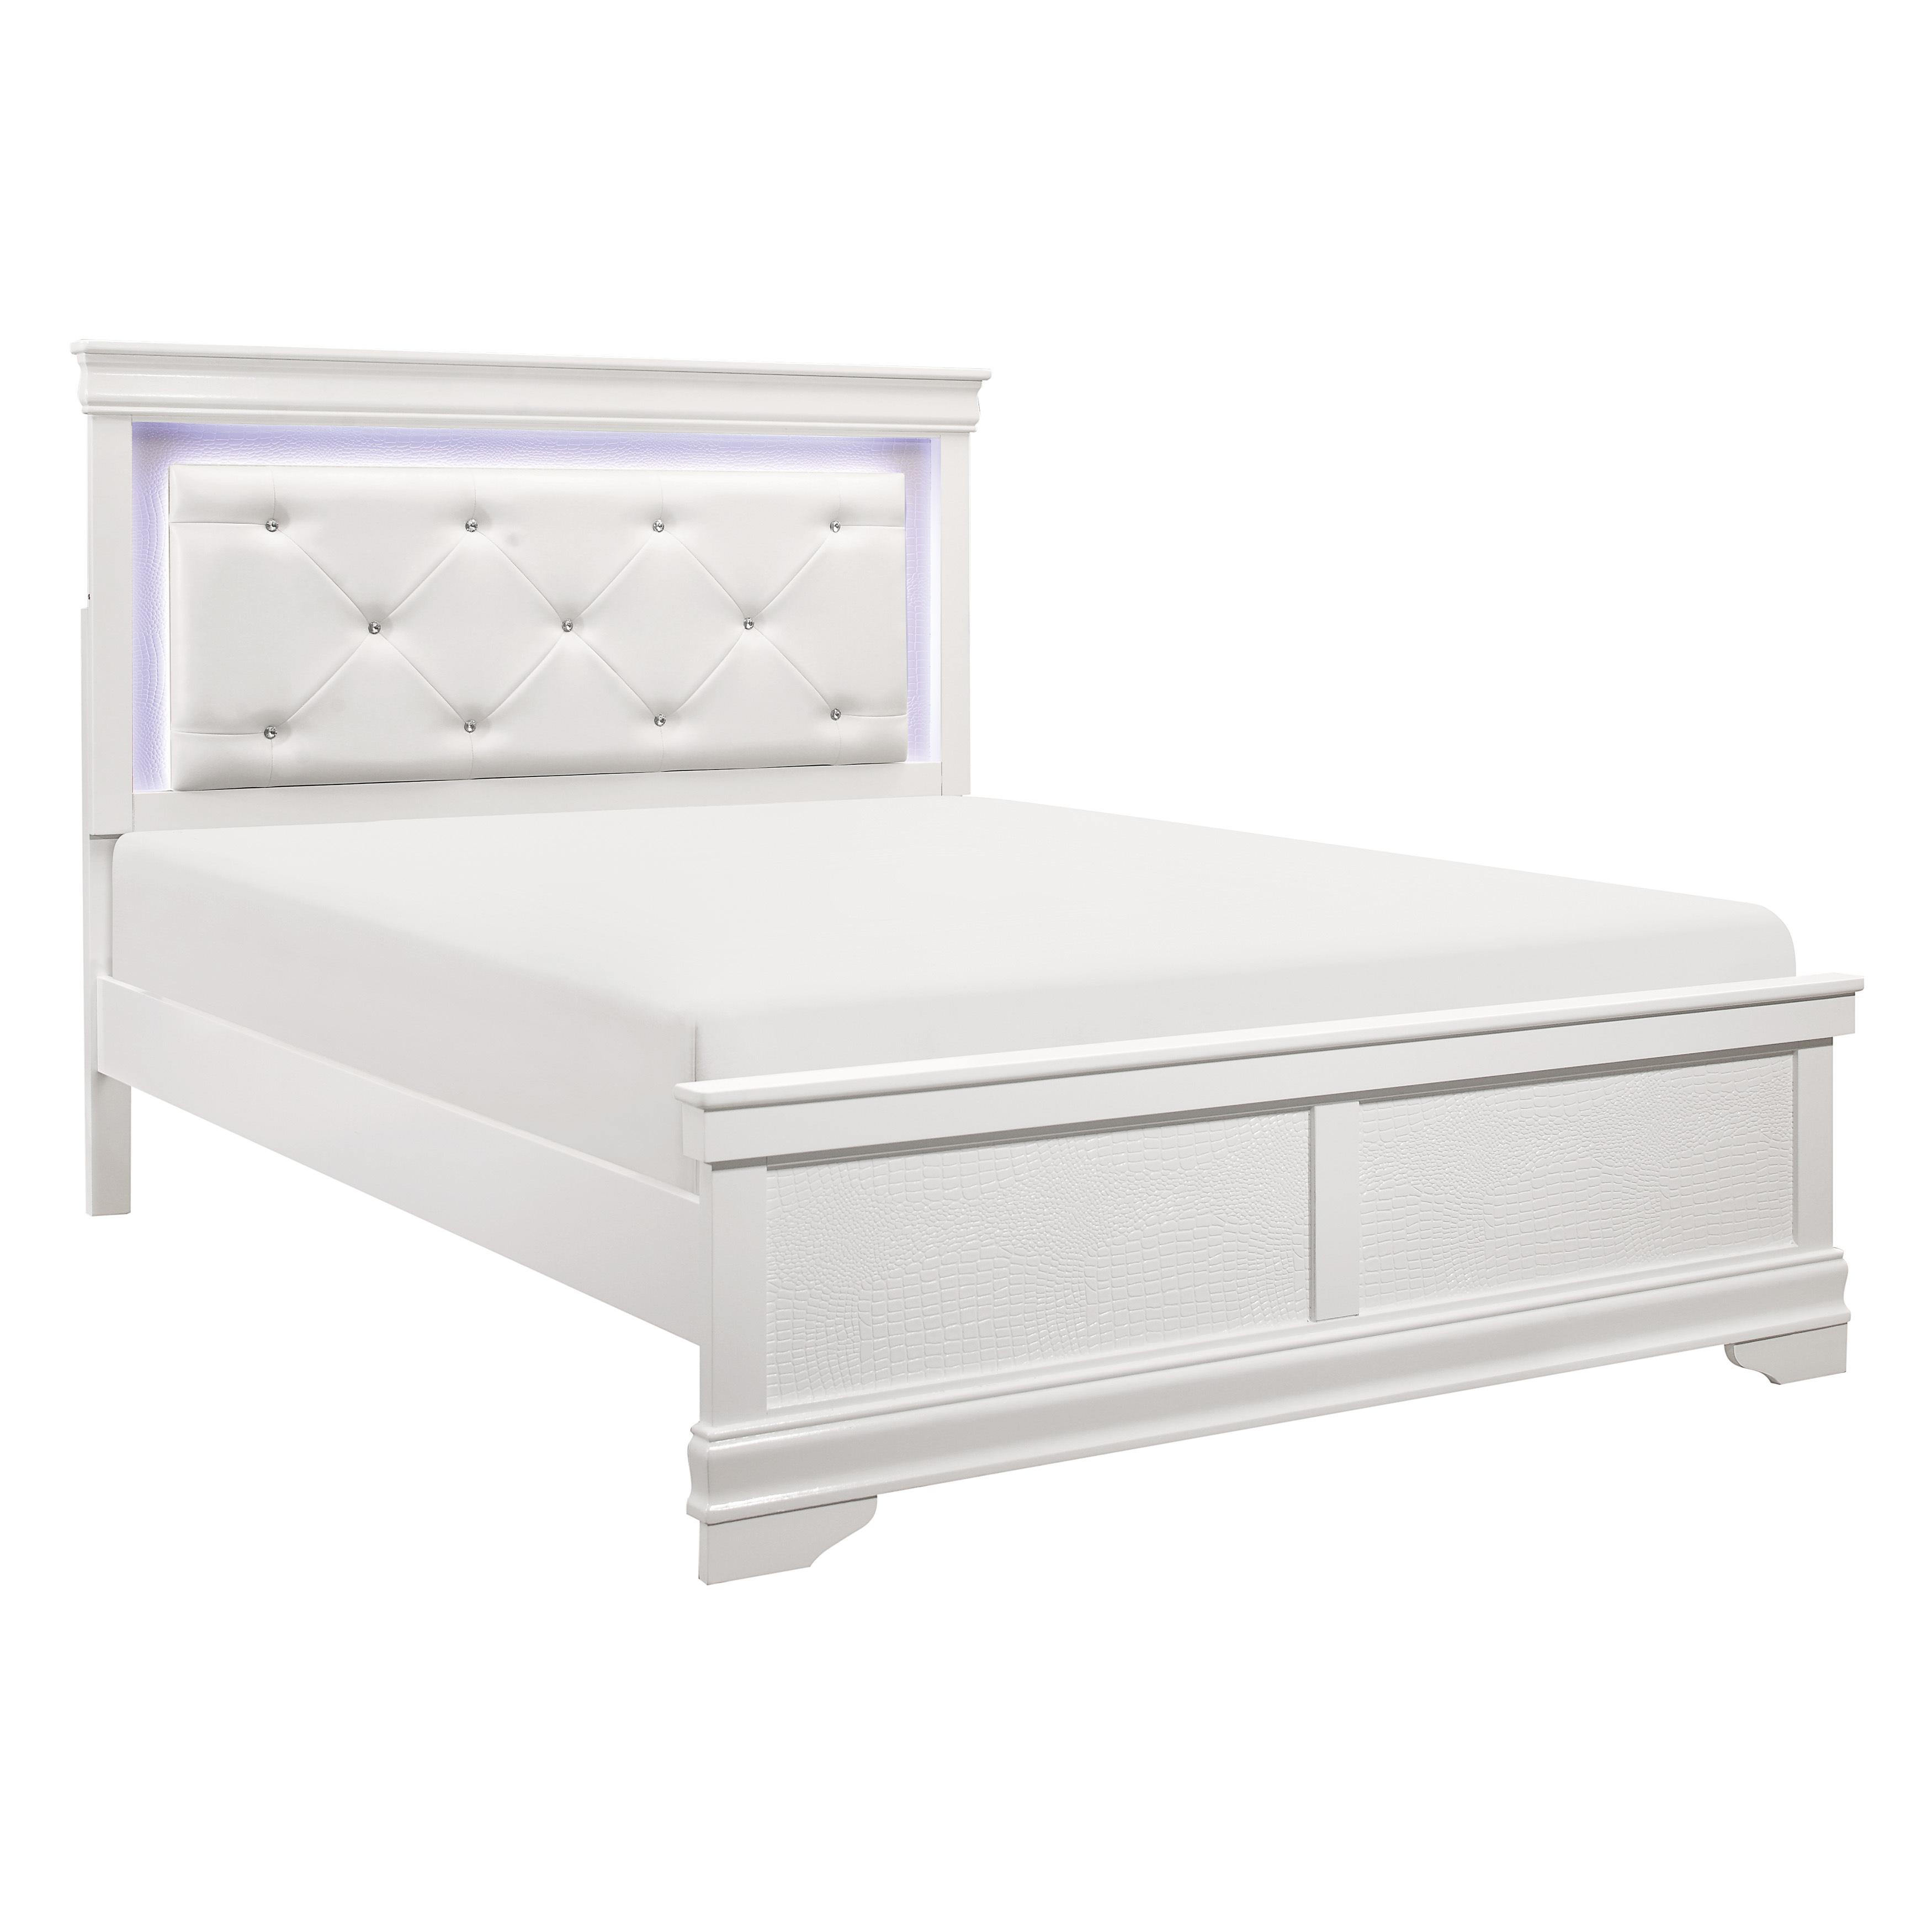 

    
Traditional White Wood Full Bedroom Set 5pcs Homelegance 1556WF-1* Lana
